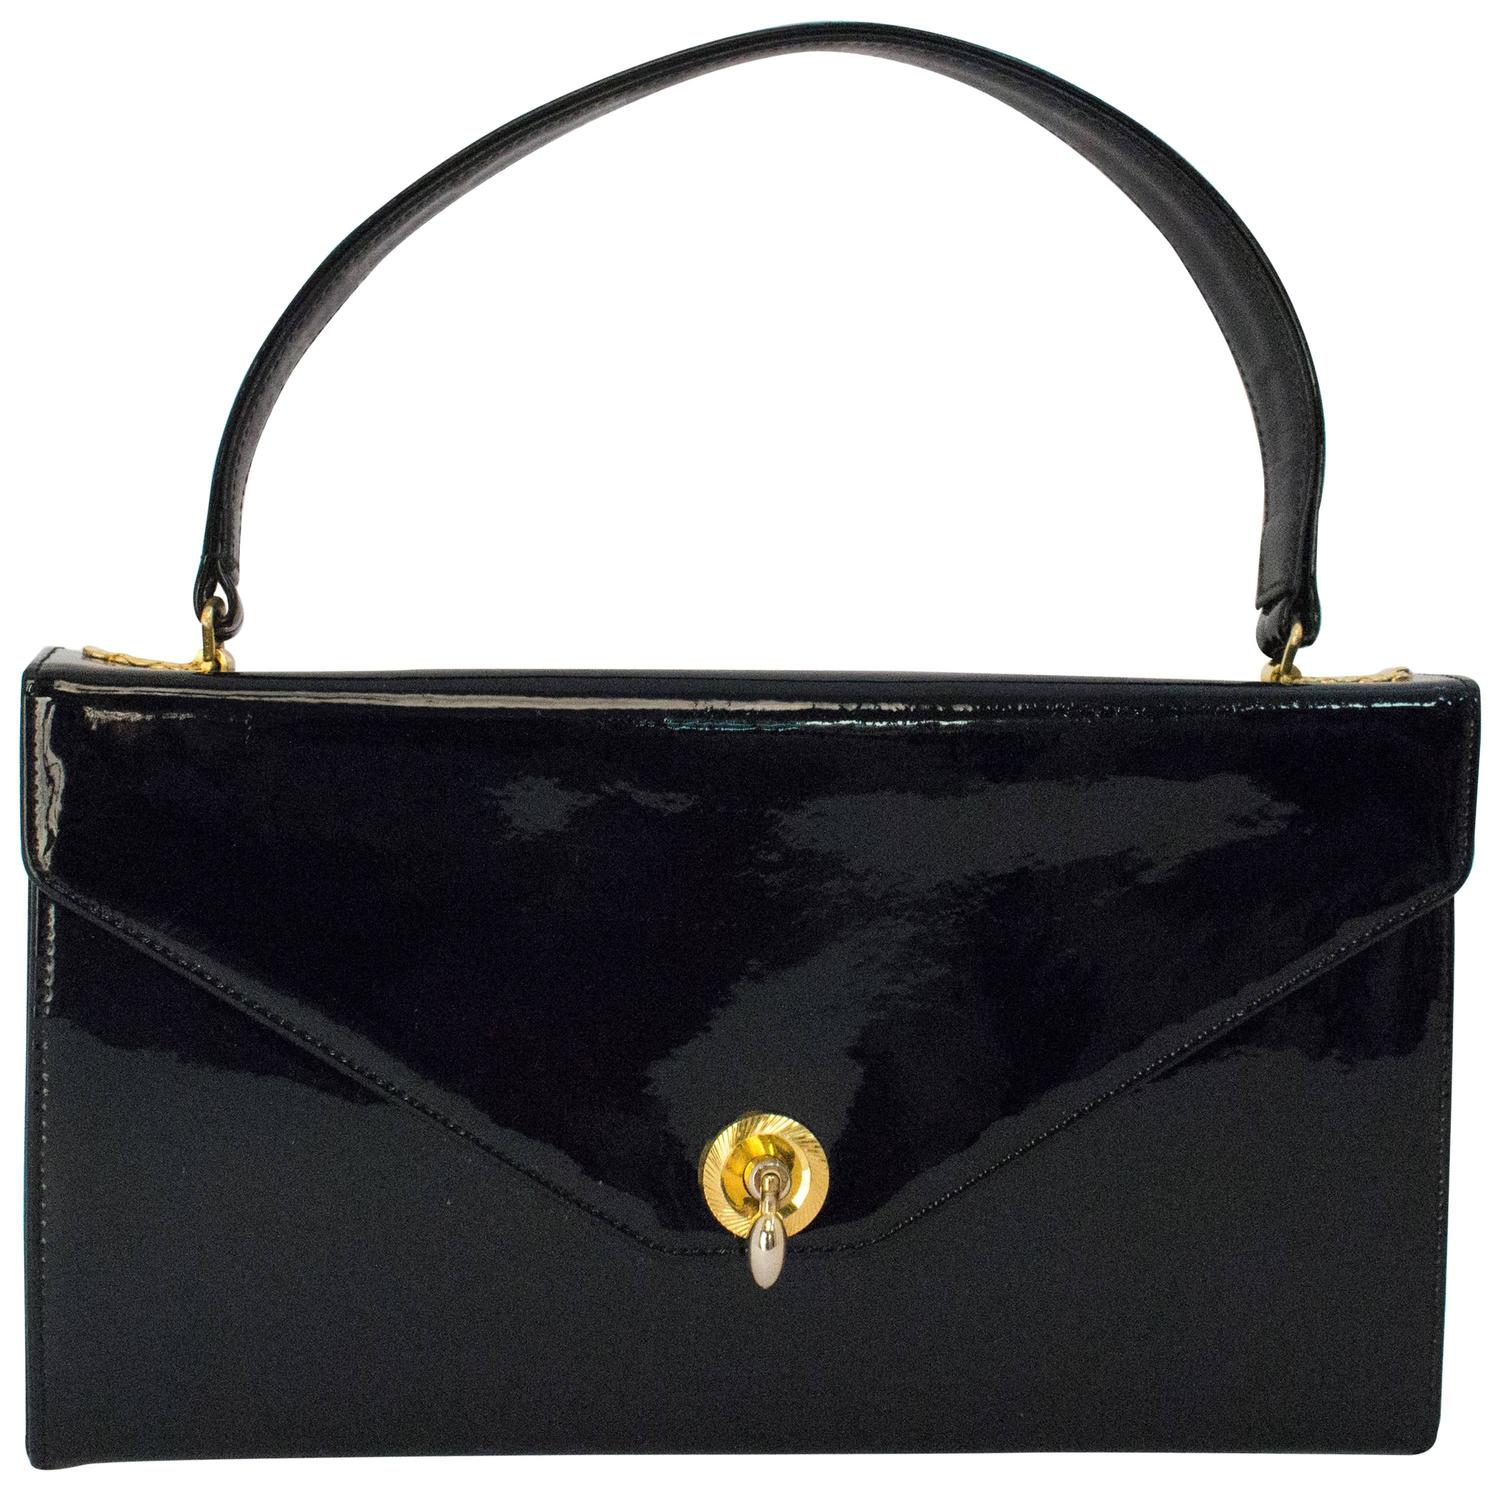 50s Black Patent Leather Handbag For Sale at 1stdibs